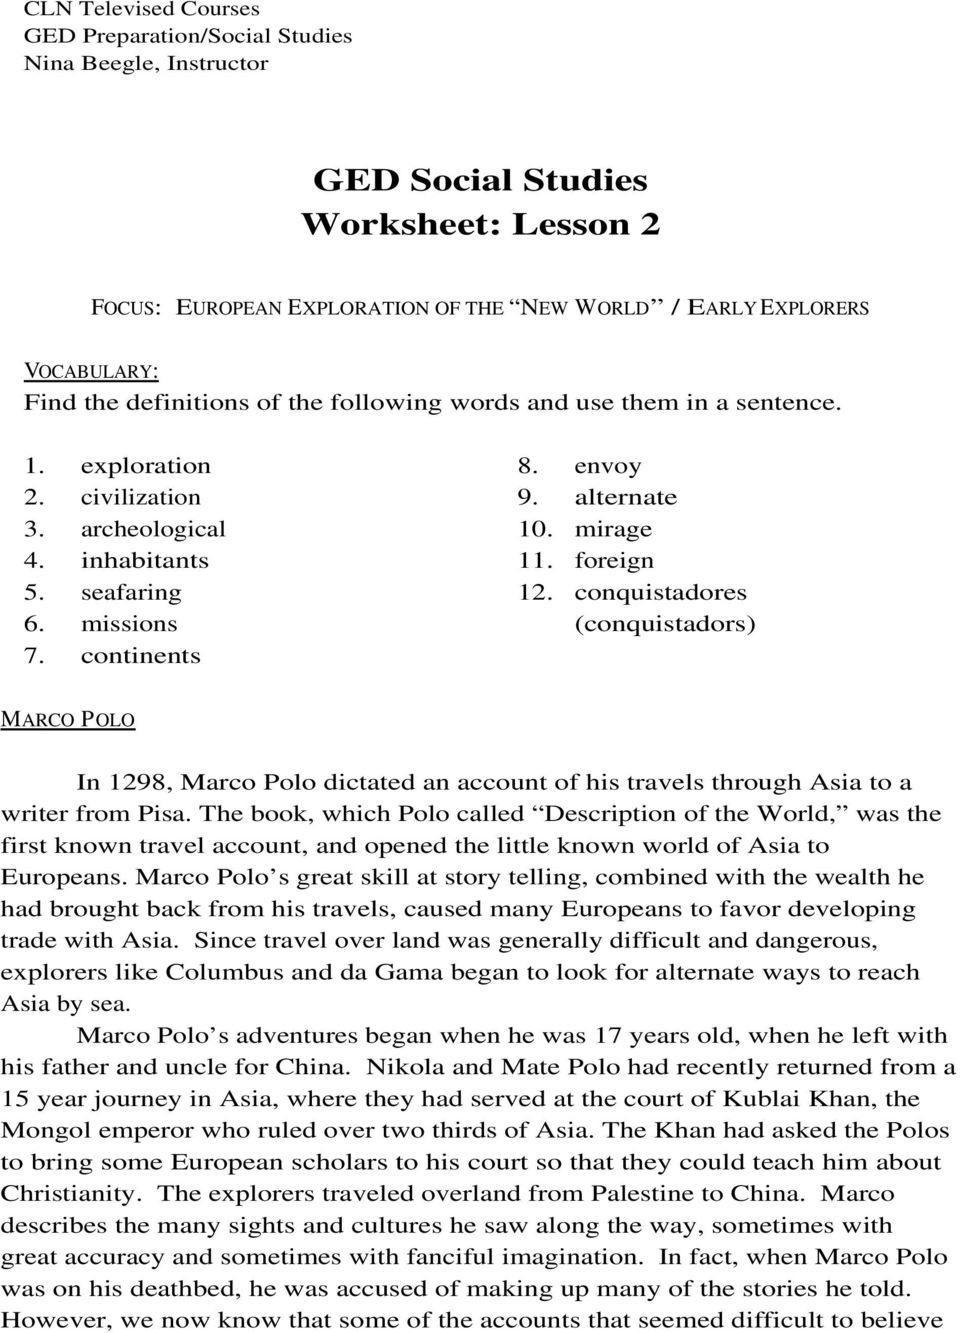 Ged Social Studies Worksheet Lesson 2 Pdf — db-excel.com